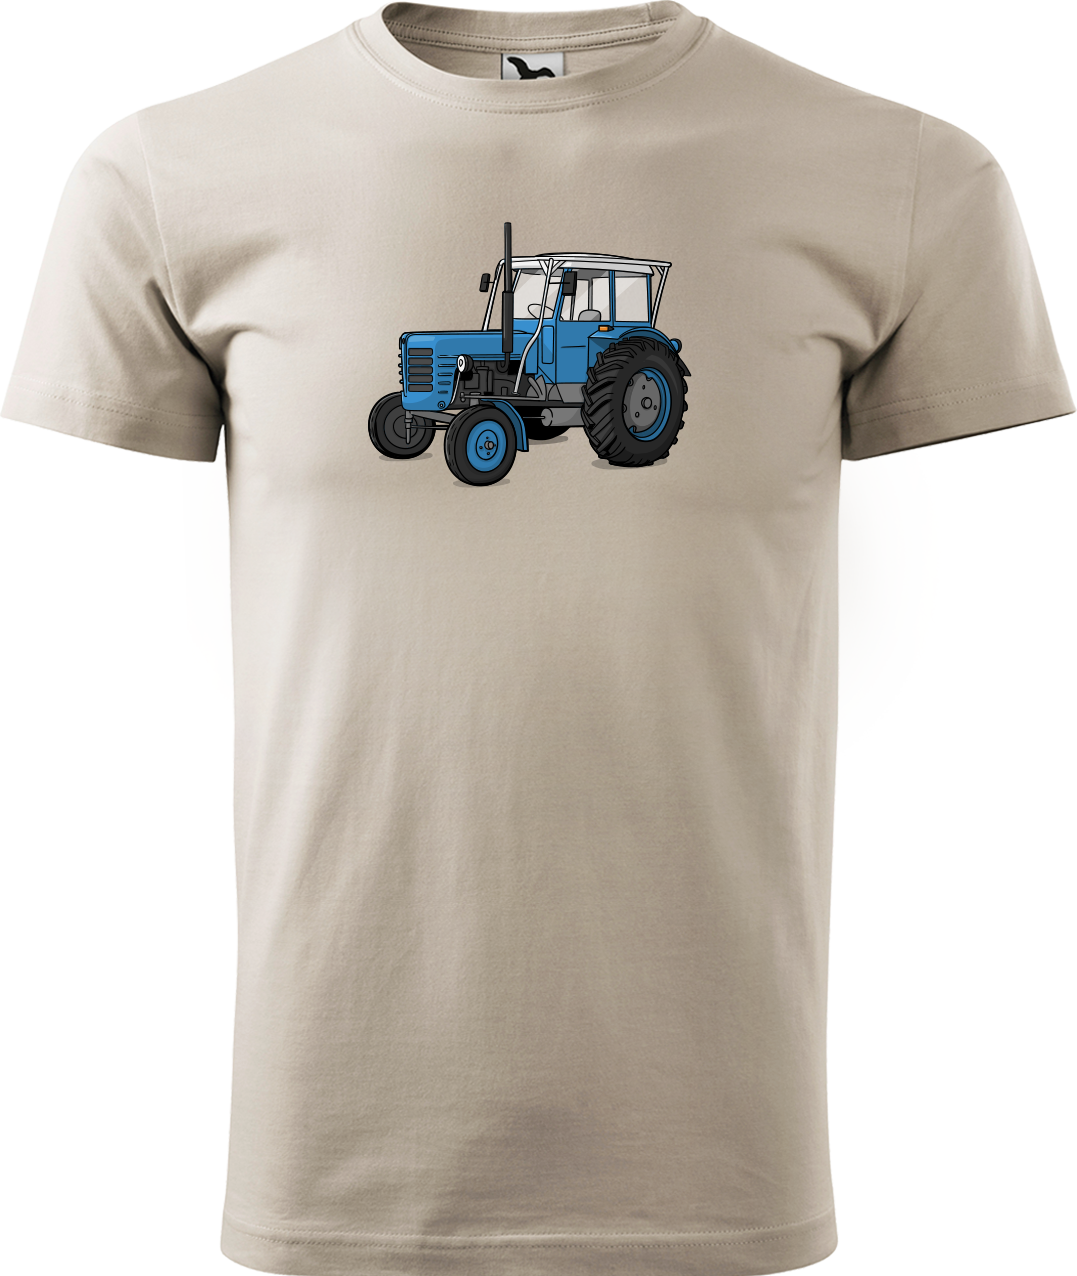 Tričko s traktorem - Starý traktor Velikost: M, Barva: Béžová (51)